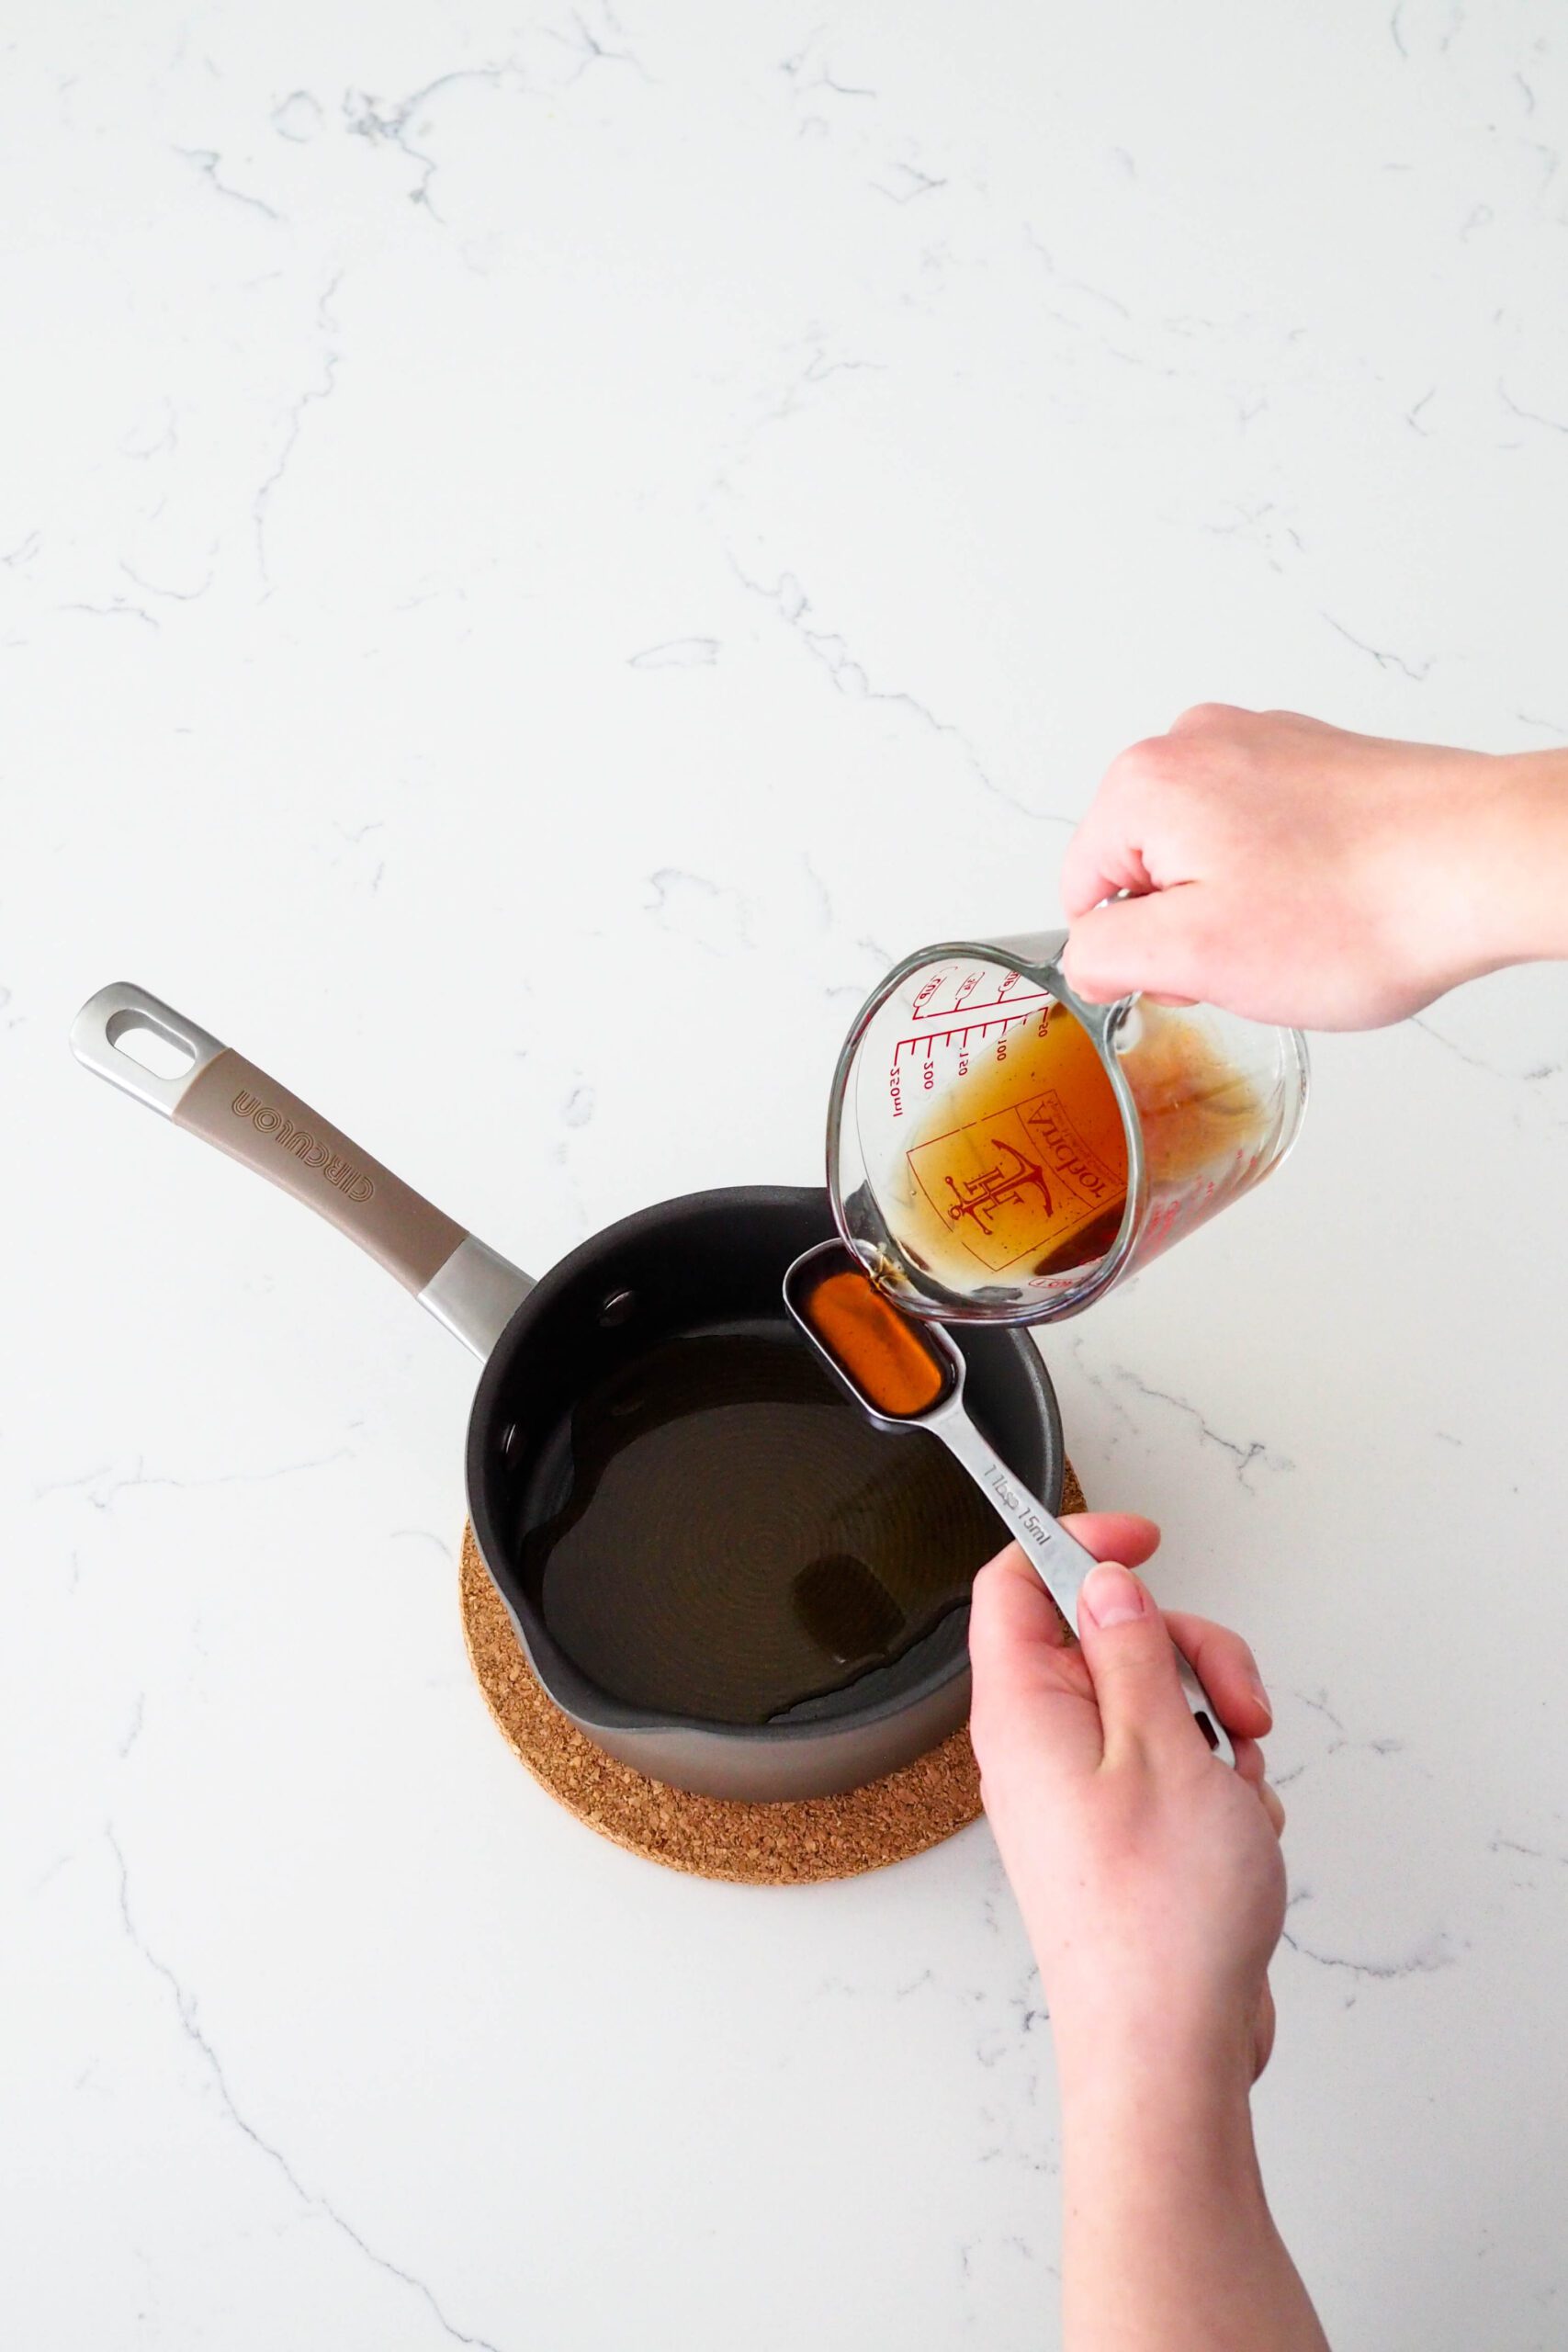 Earl Grey tea is measured into a saucepan.